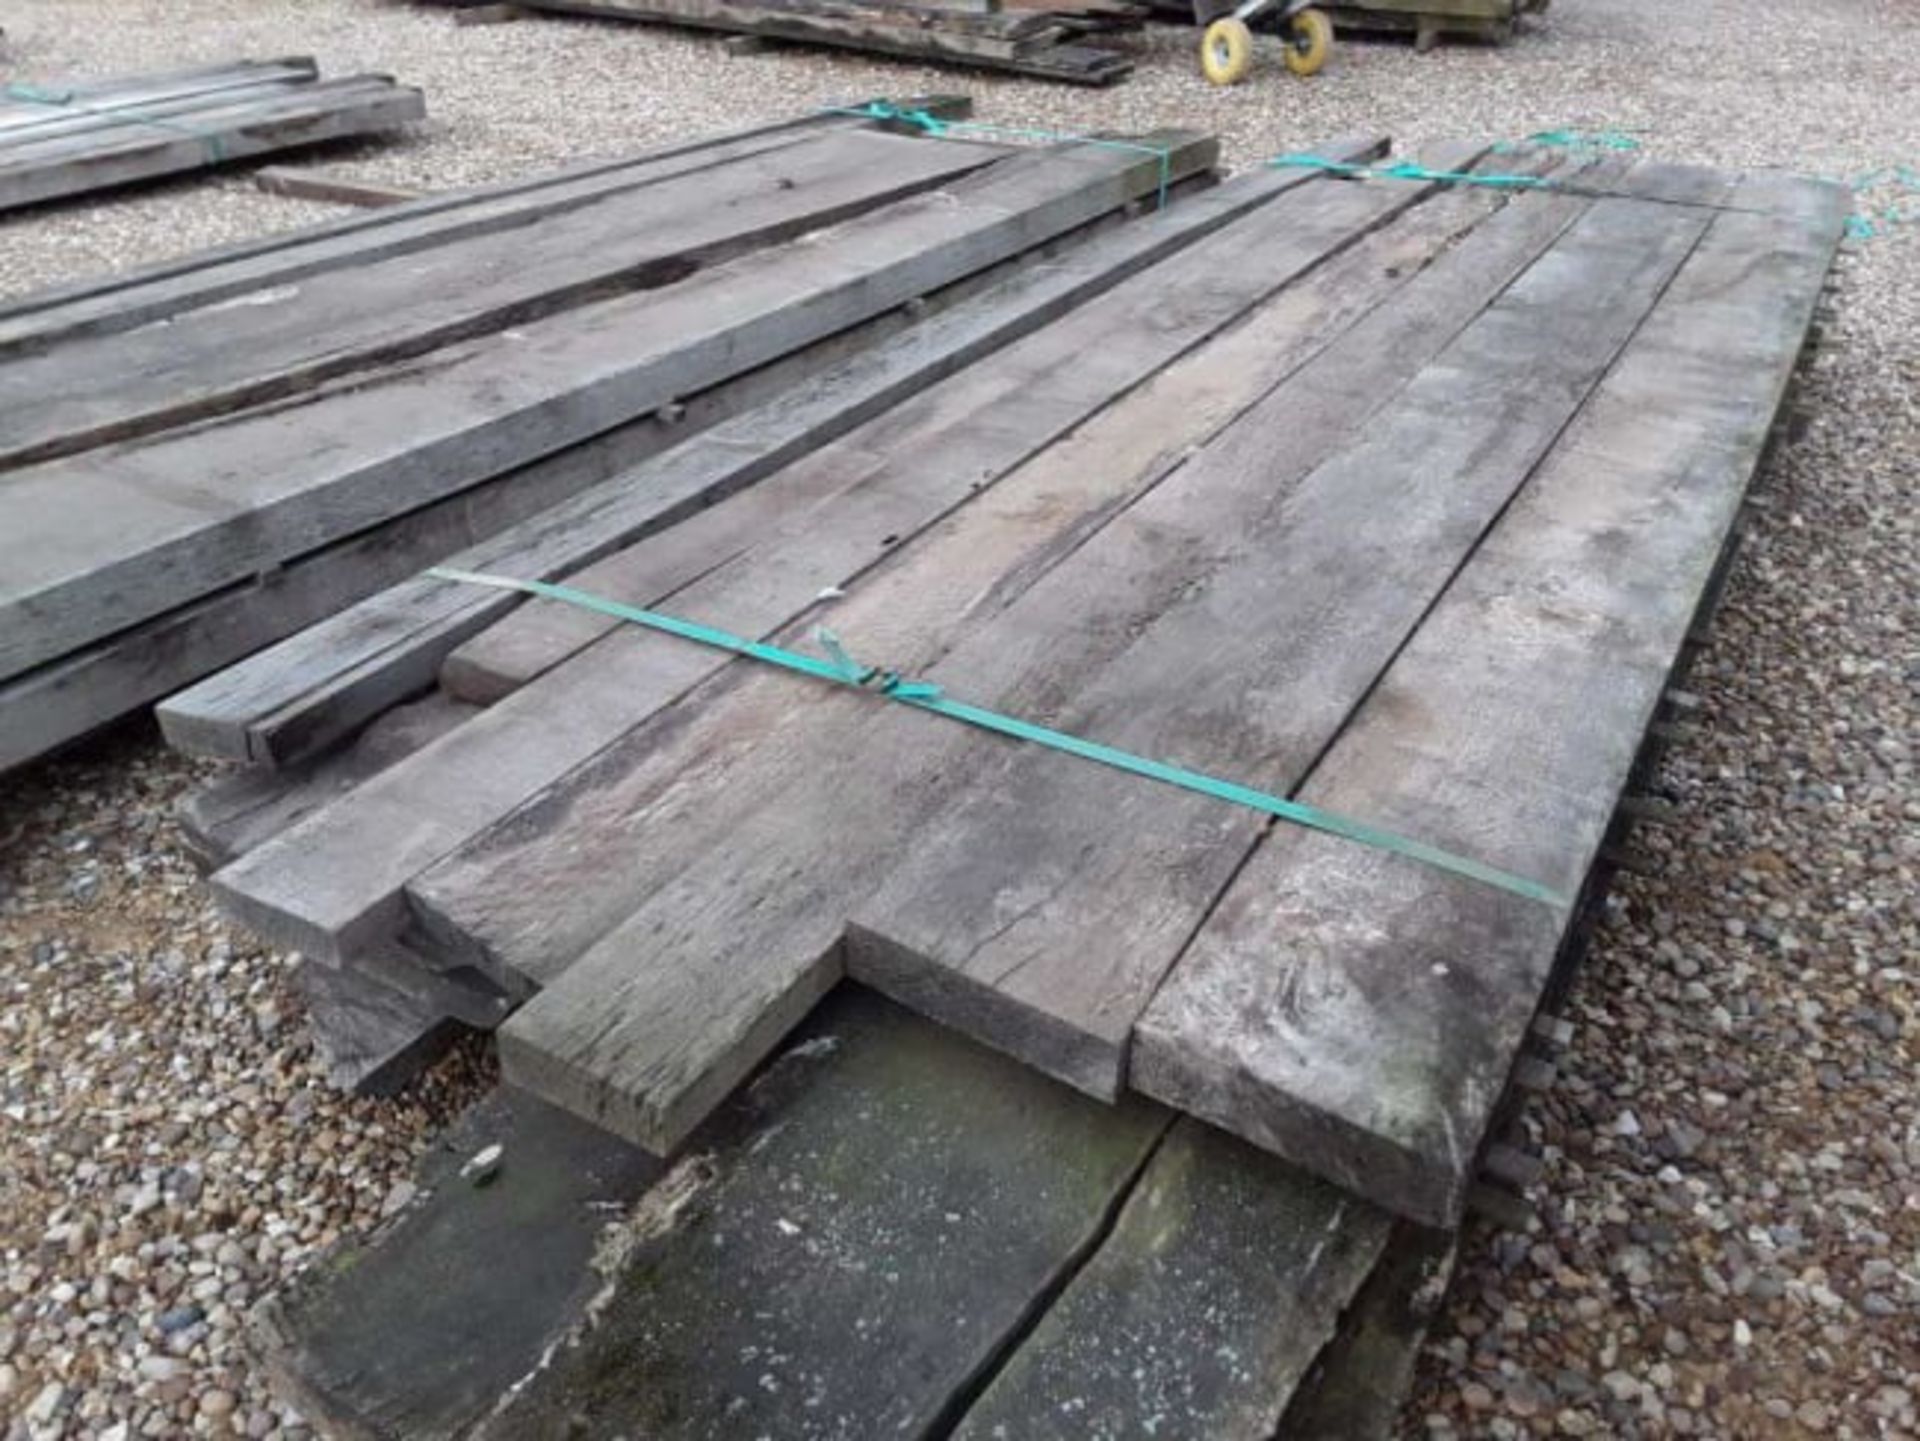 19 x Hardwood Timber Air Dried Sawn Waney Edge/ Live Edge English Oak Slabs/ Boards - Image 3 of 3